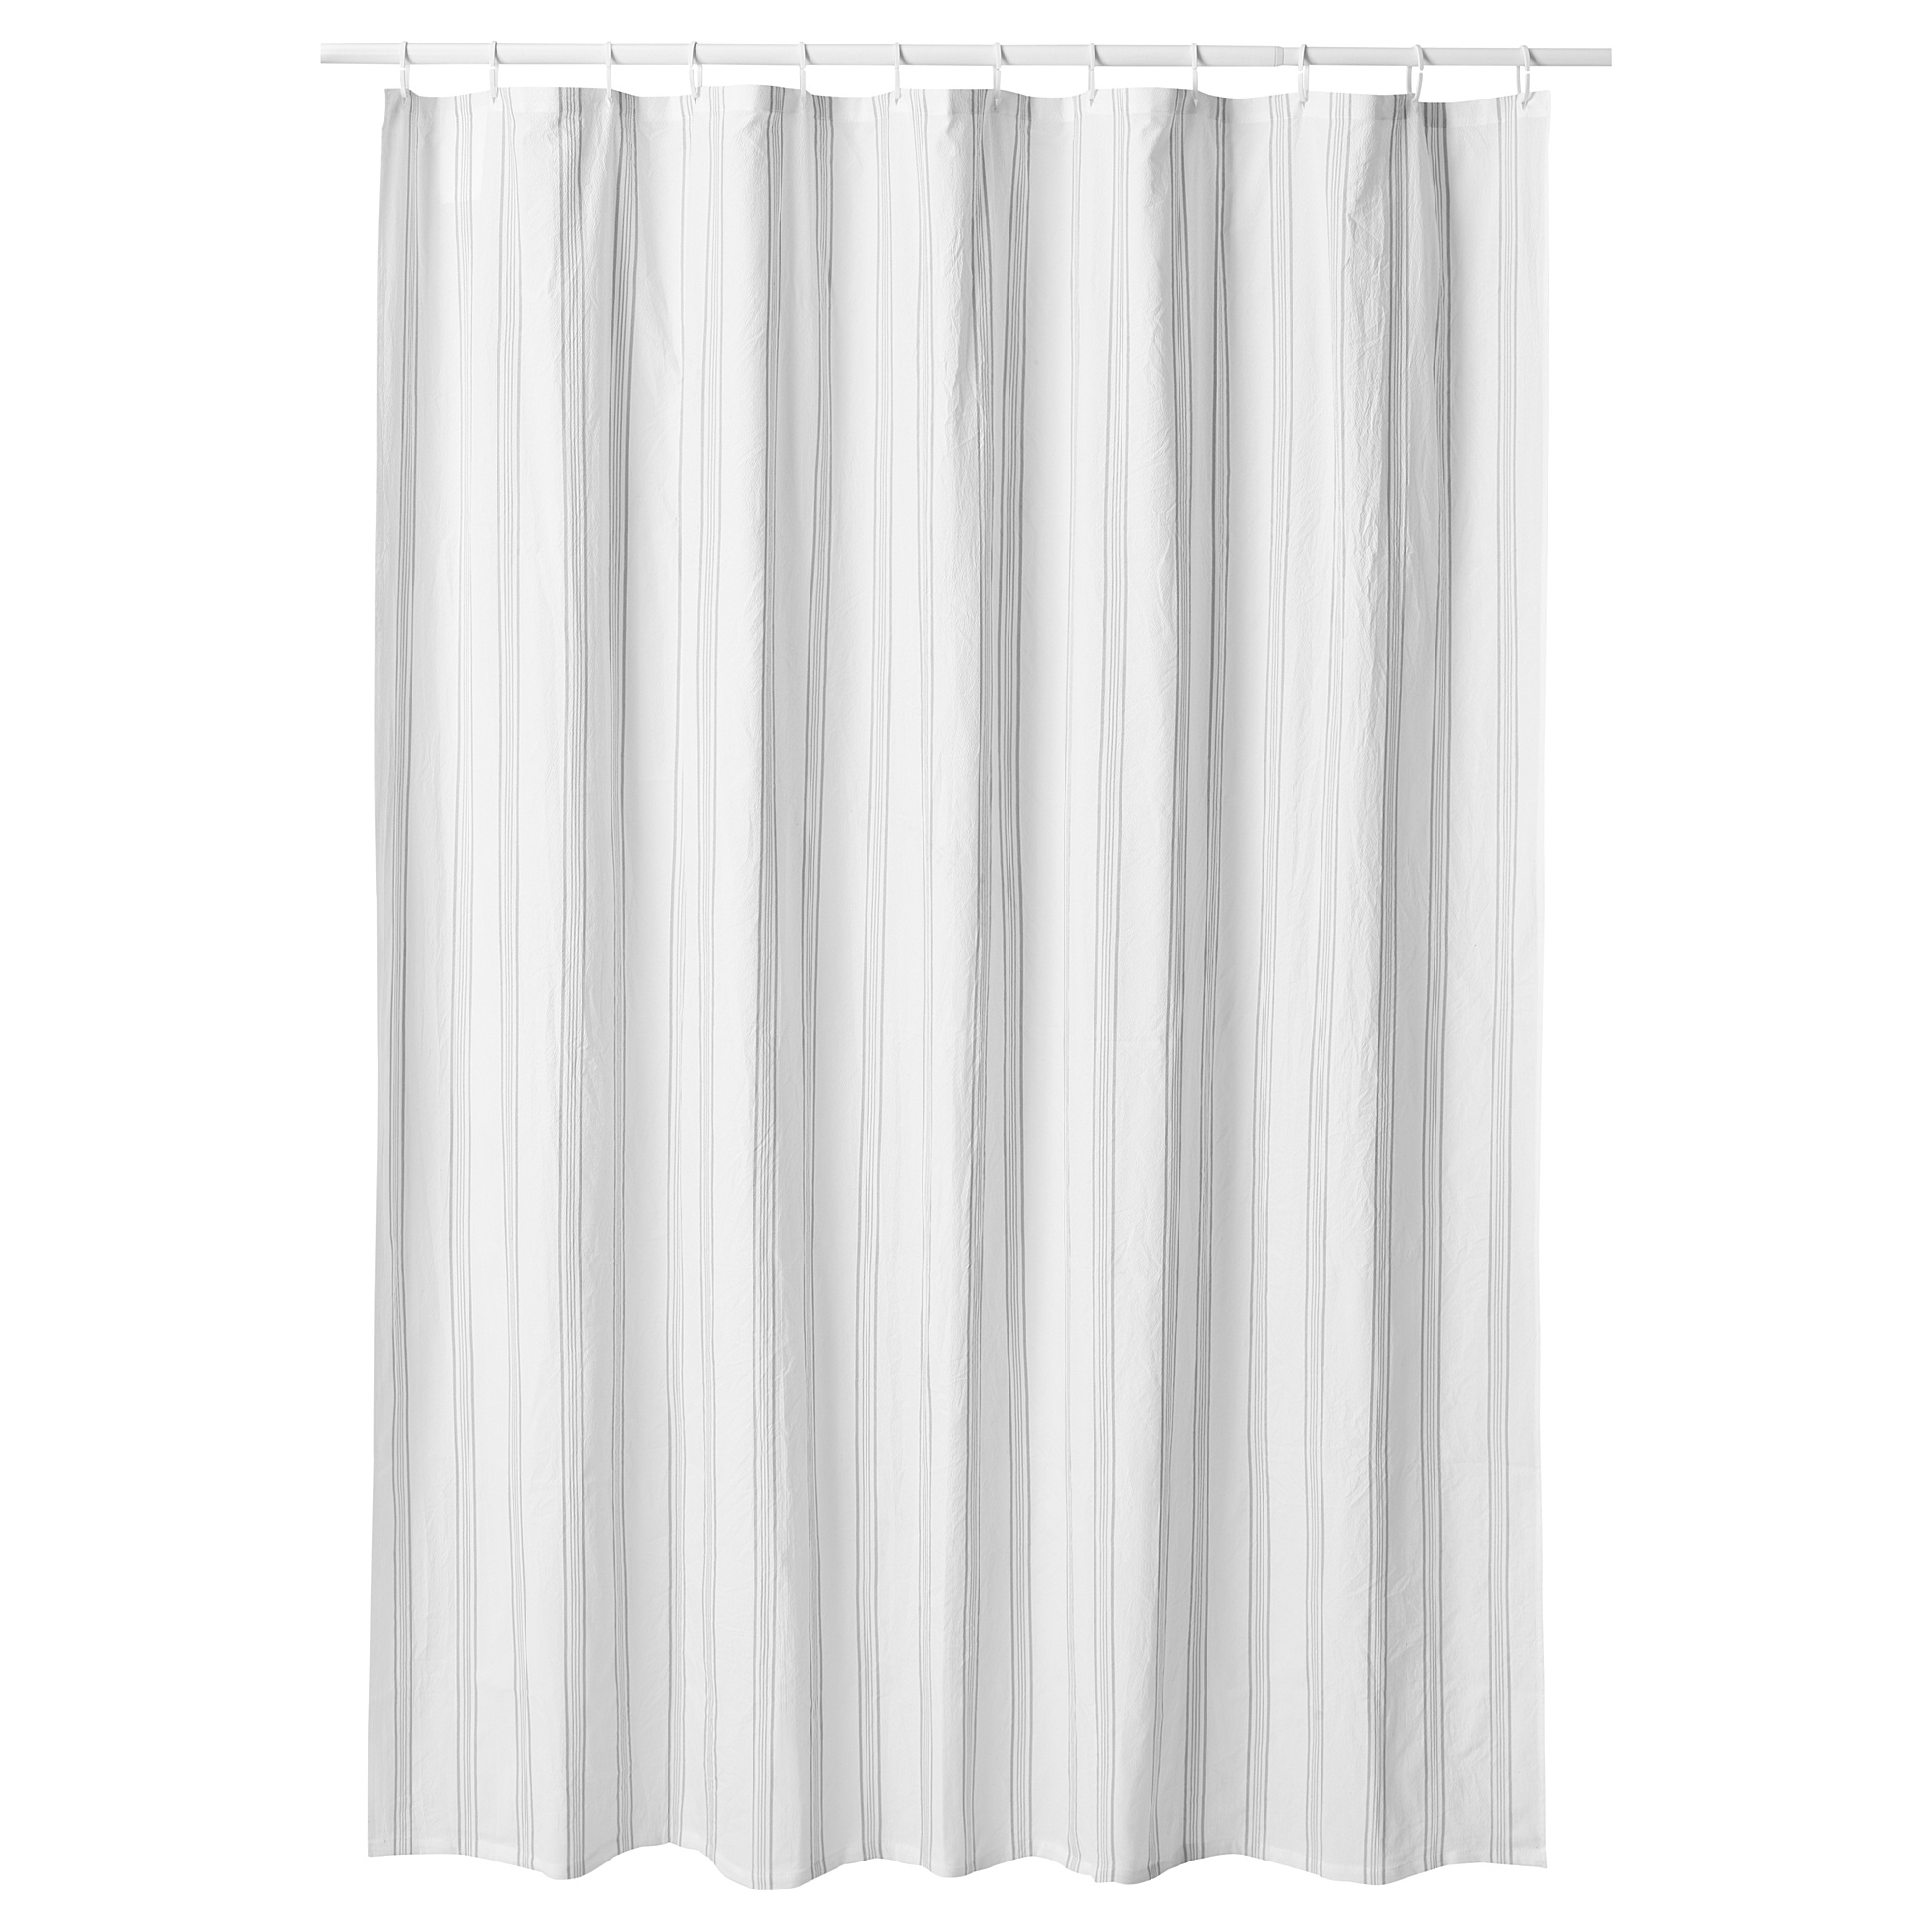 SVARTSTARR shower curtain